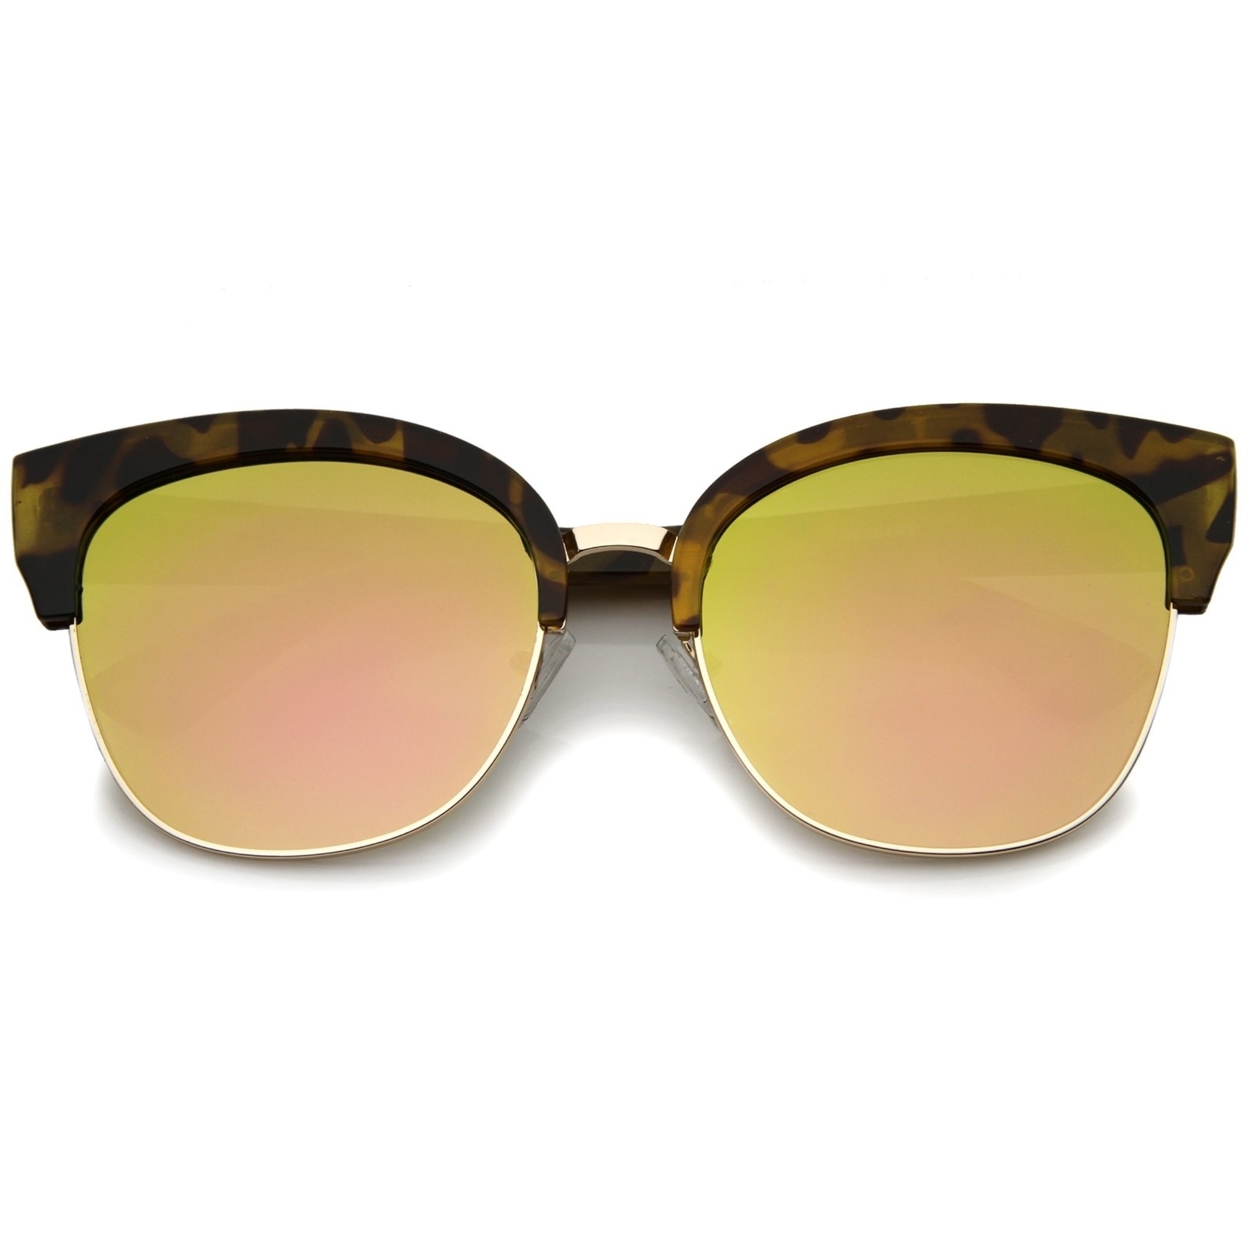 Modern Oversized Half-Frame Color Mirror Flat Lens Cat Eye Sunglasses 58mm - Tortoise / Pink Mirror